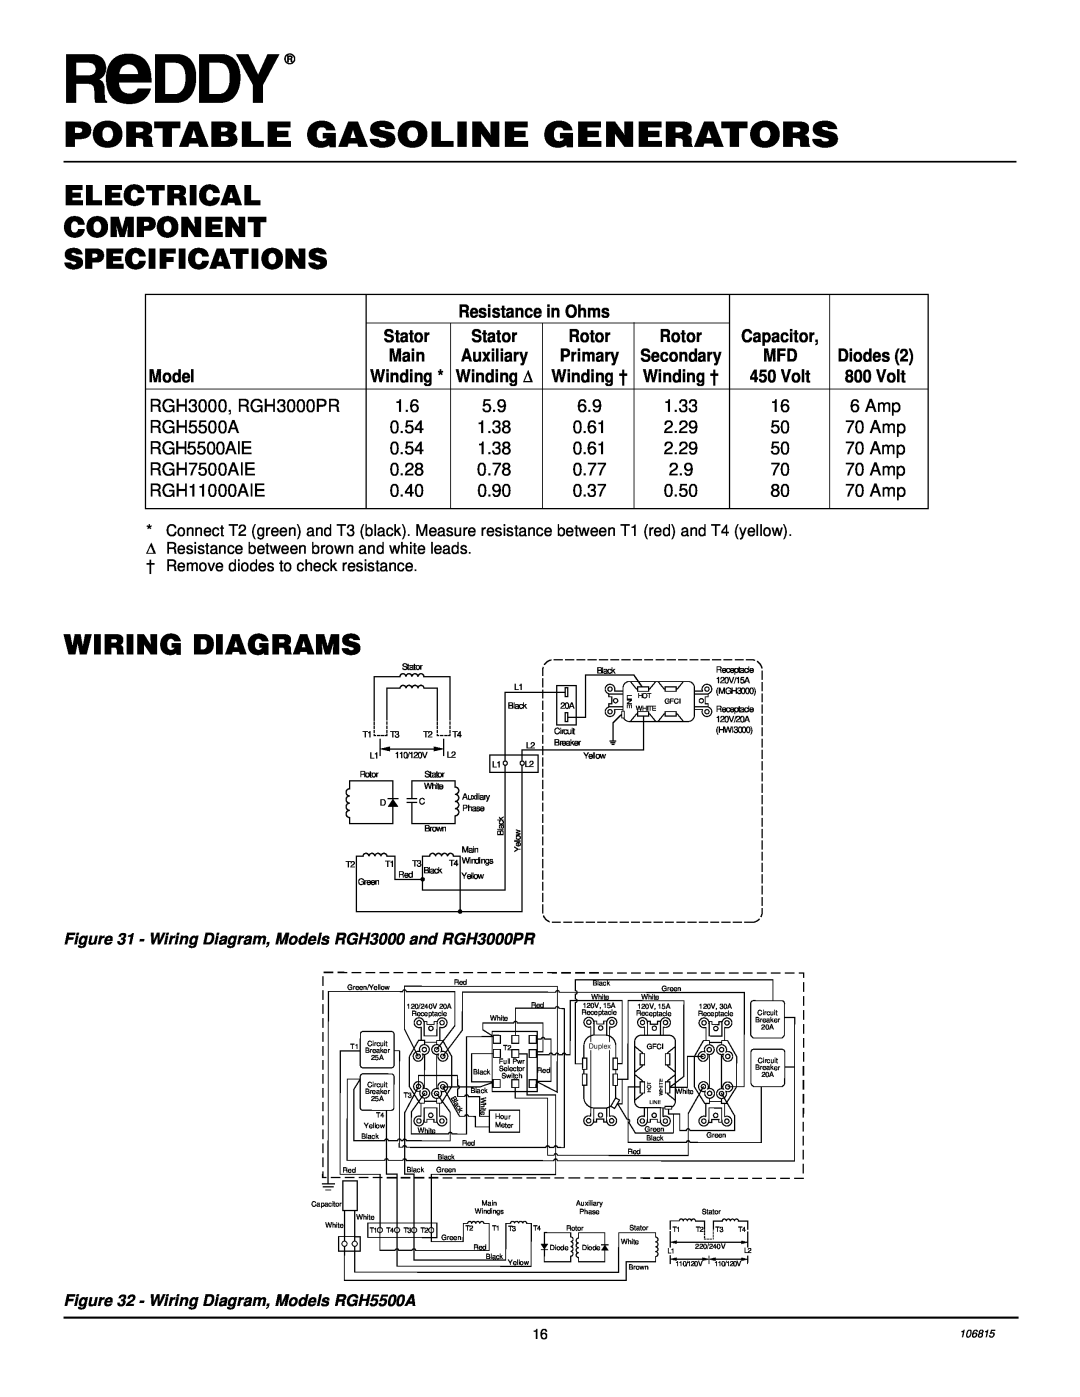 Desa Rgh3000, Rgh3000pr, Rgh5500a, Rgh5500aie, Rgh7500aie, And Rgh11000aie Electrical Component Specifications, Stator 